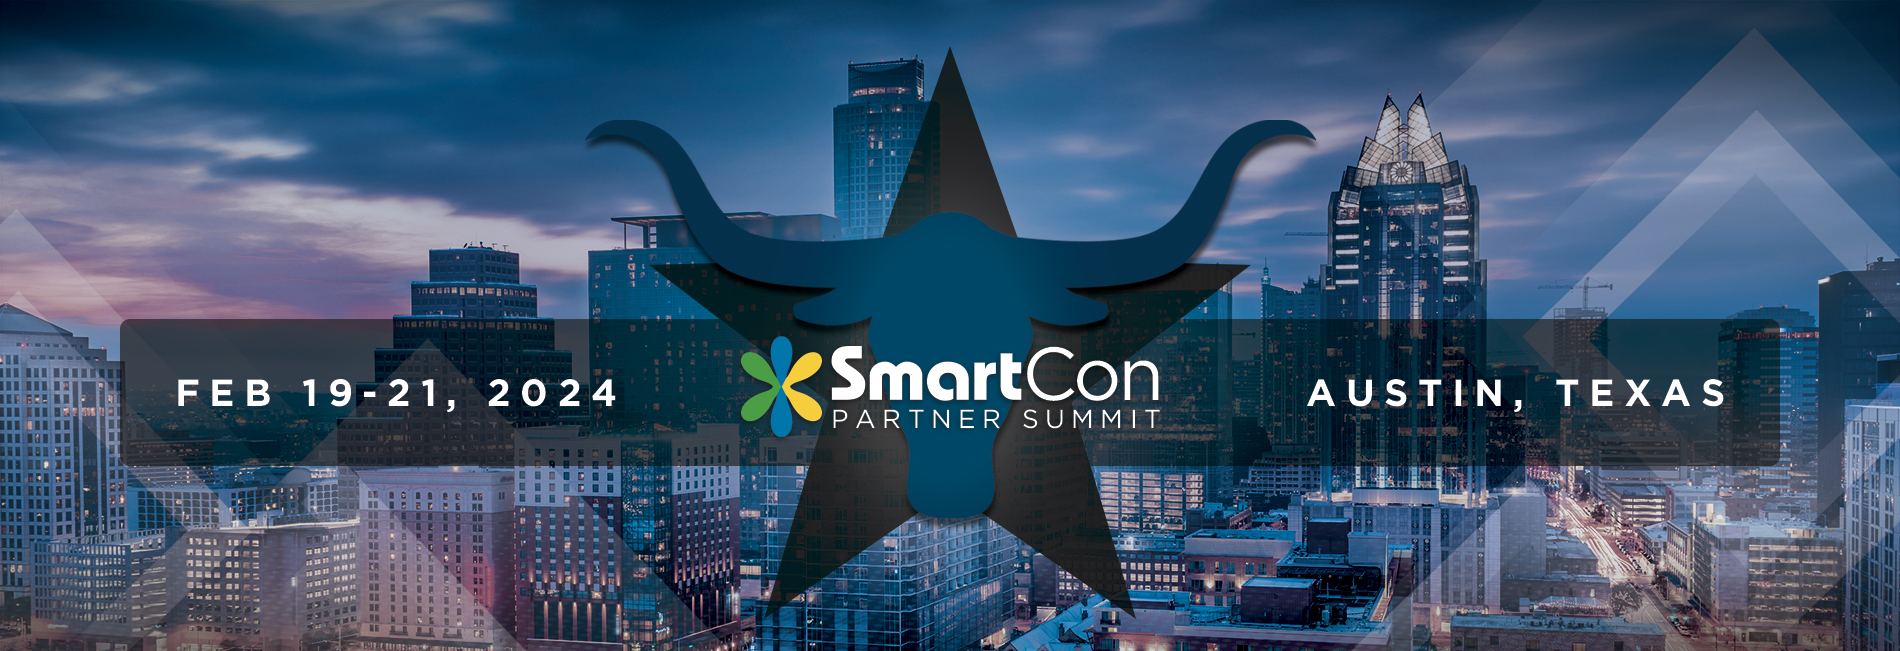 SmartCon 2024 Sponsorship Opportunities